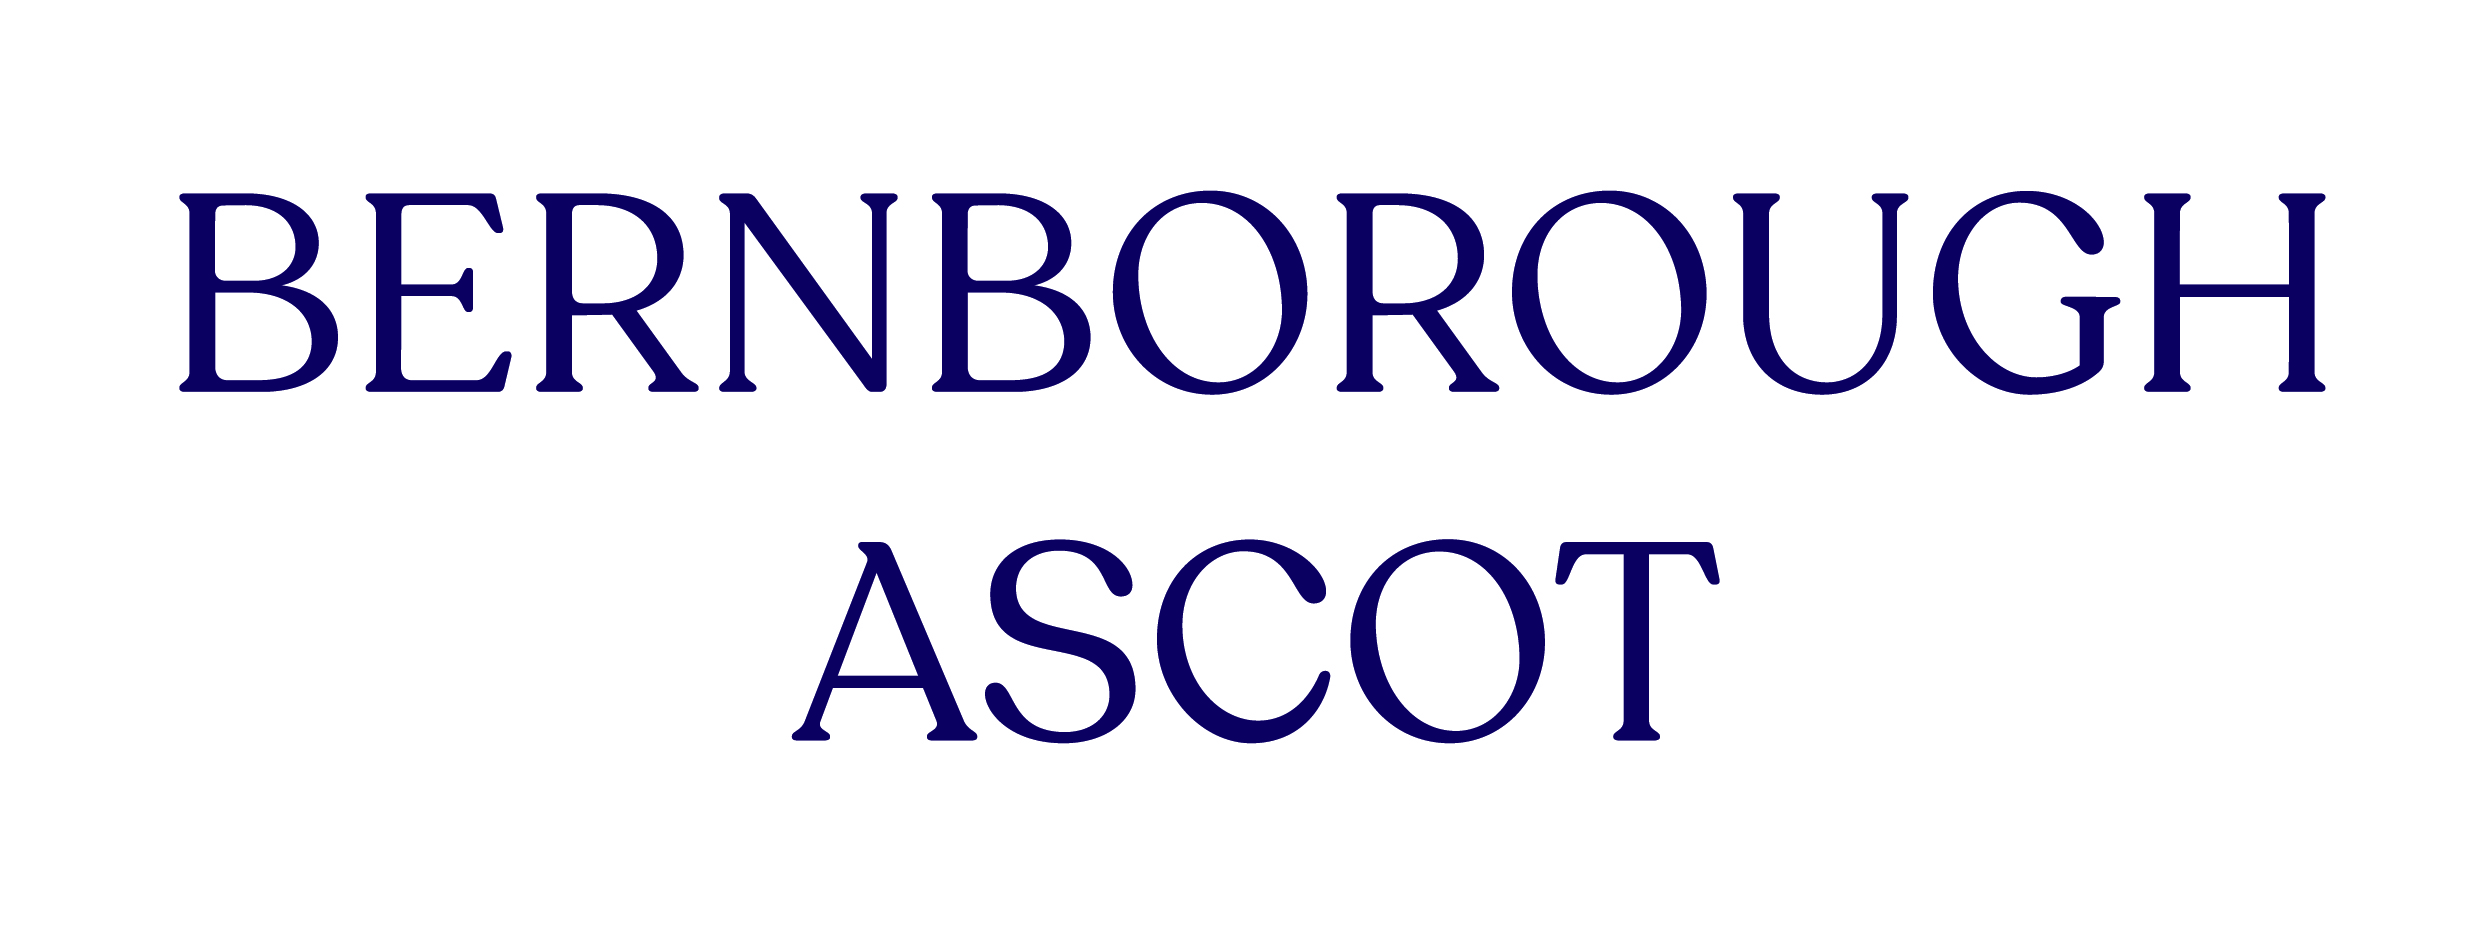 Bernborough Ascot Logo Stacked